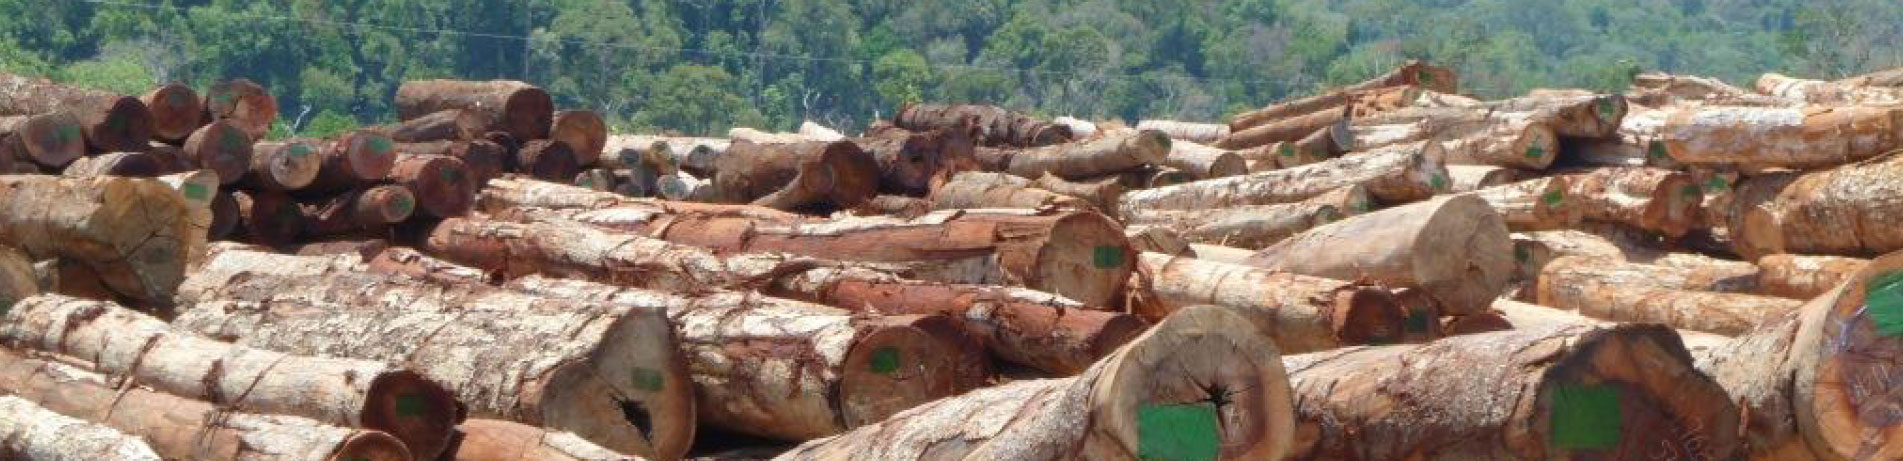 Stockplile of logs in Vietnam